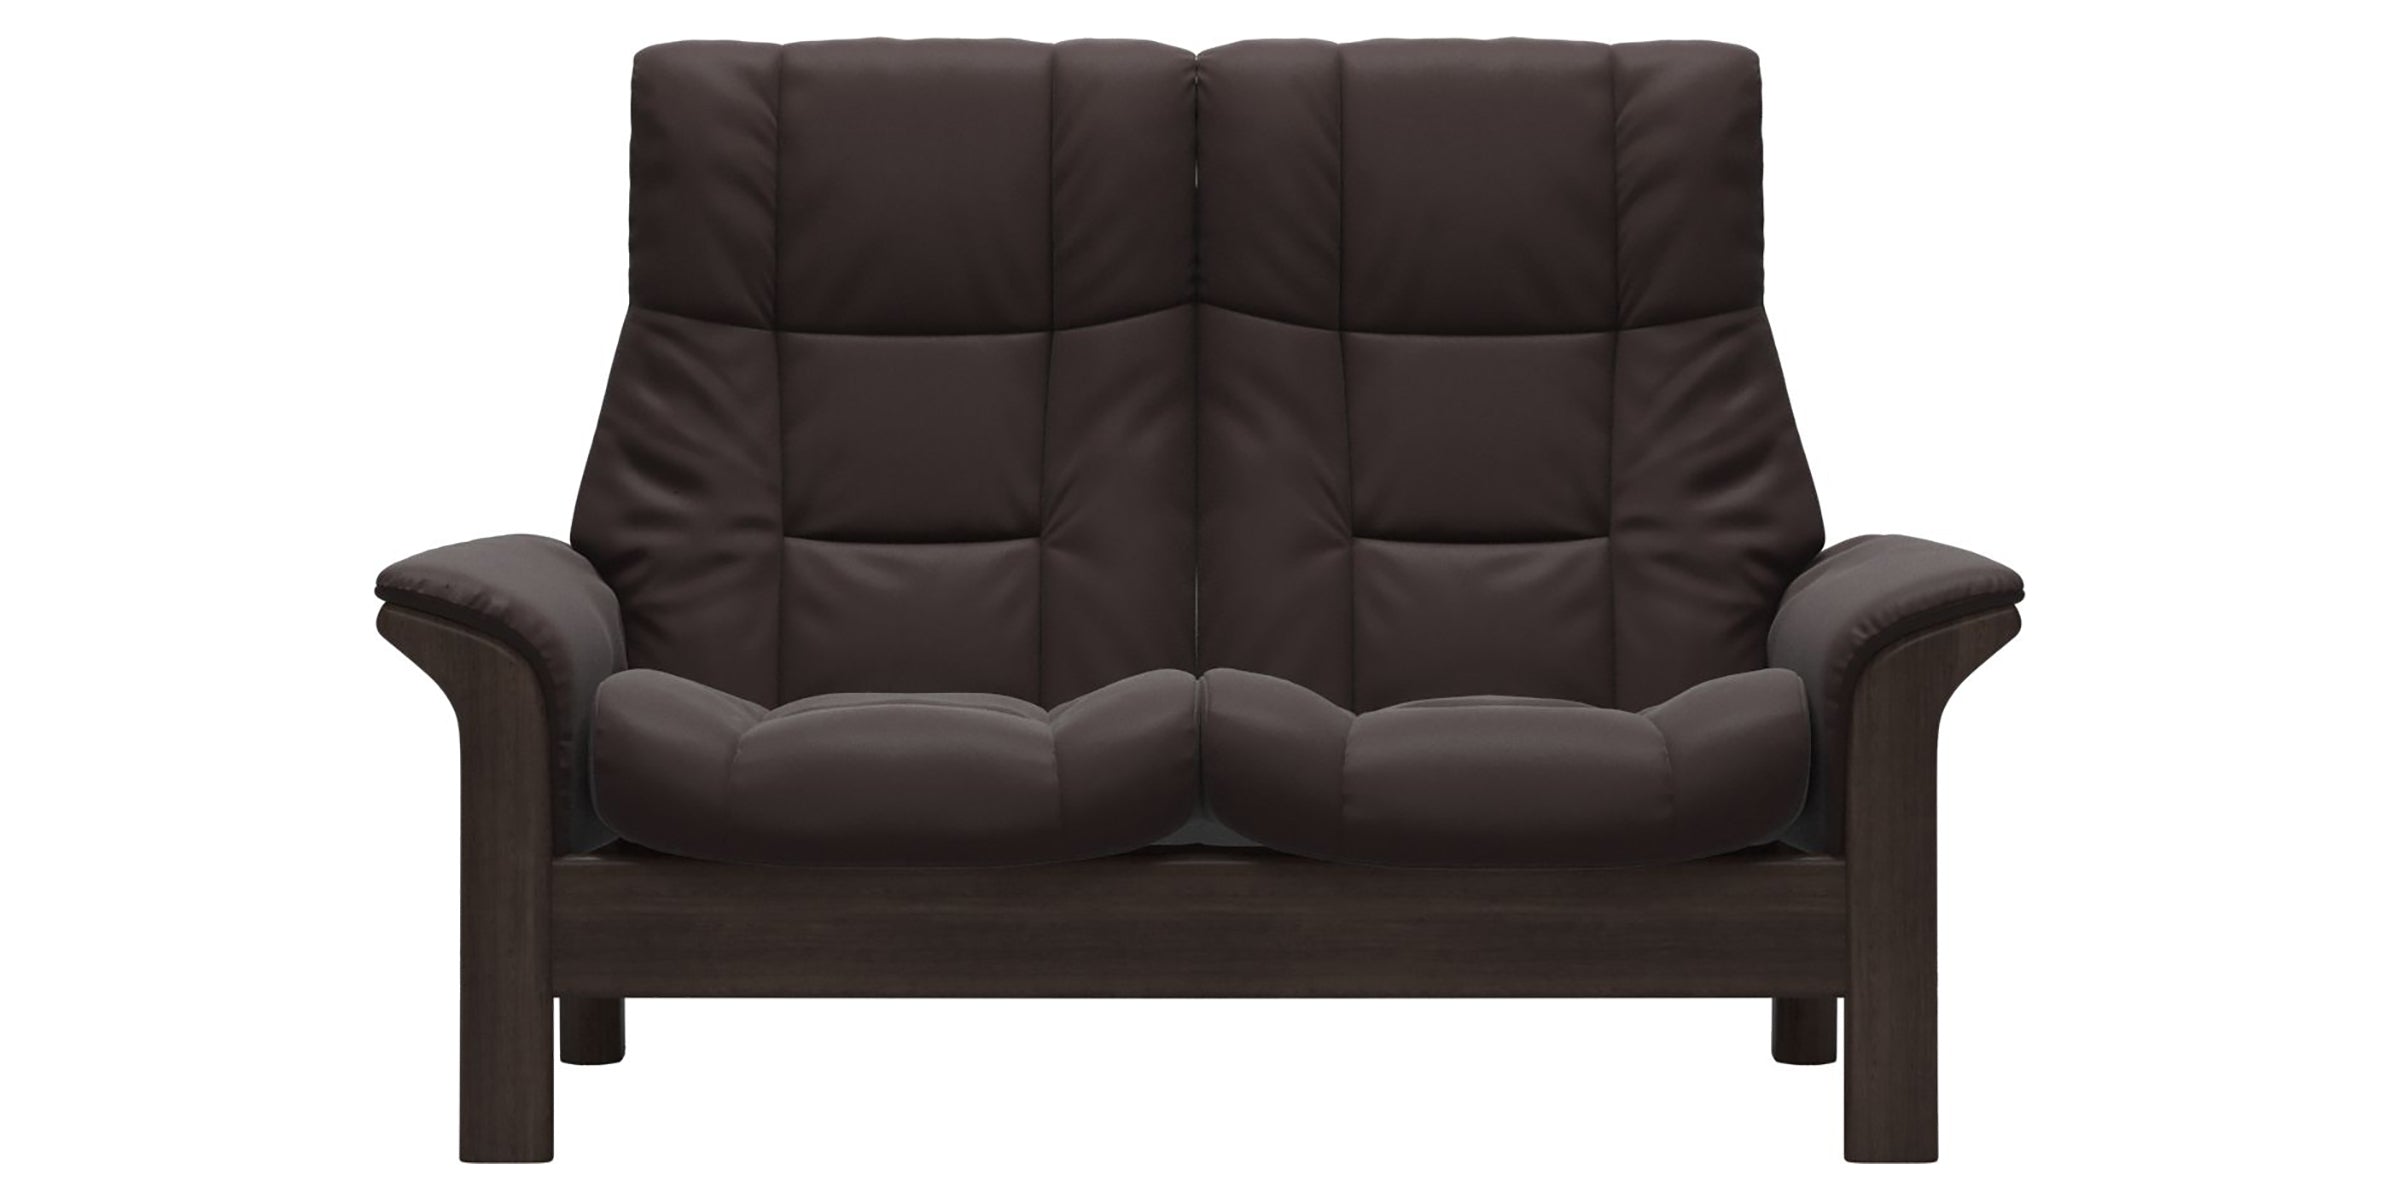 Paloma Leather Chocolate and Wenge Base | Stressless Windsor 2-Seater High Back Sofa | Valley Ridge Furniture